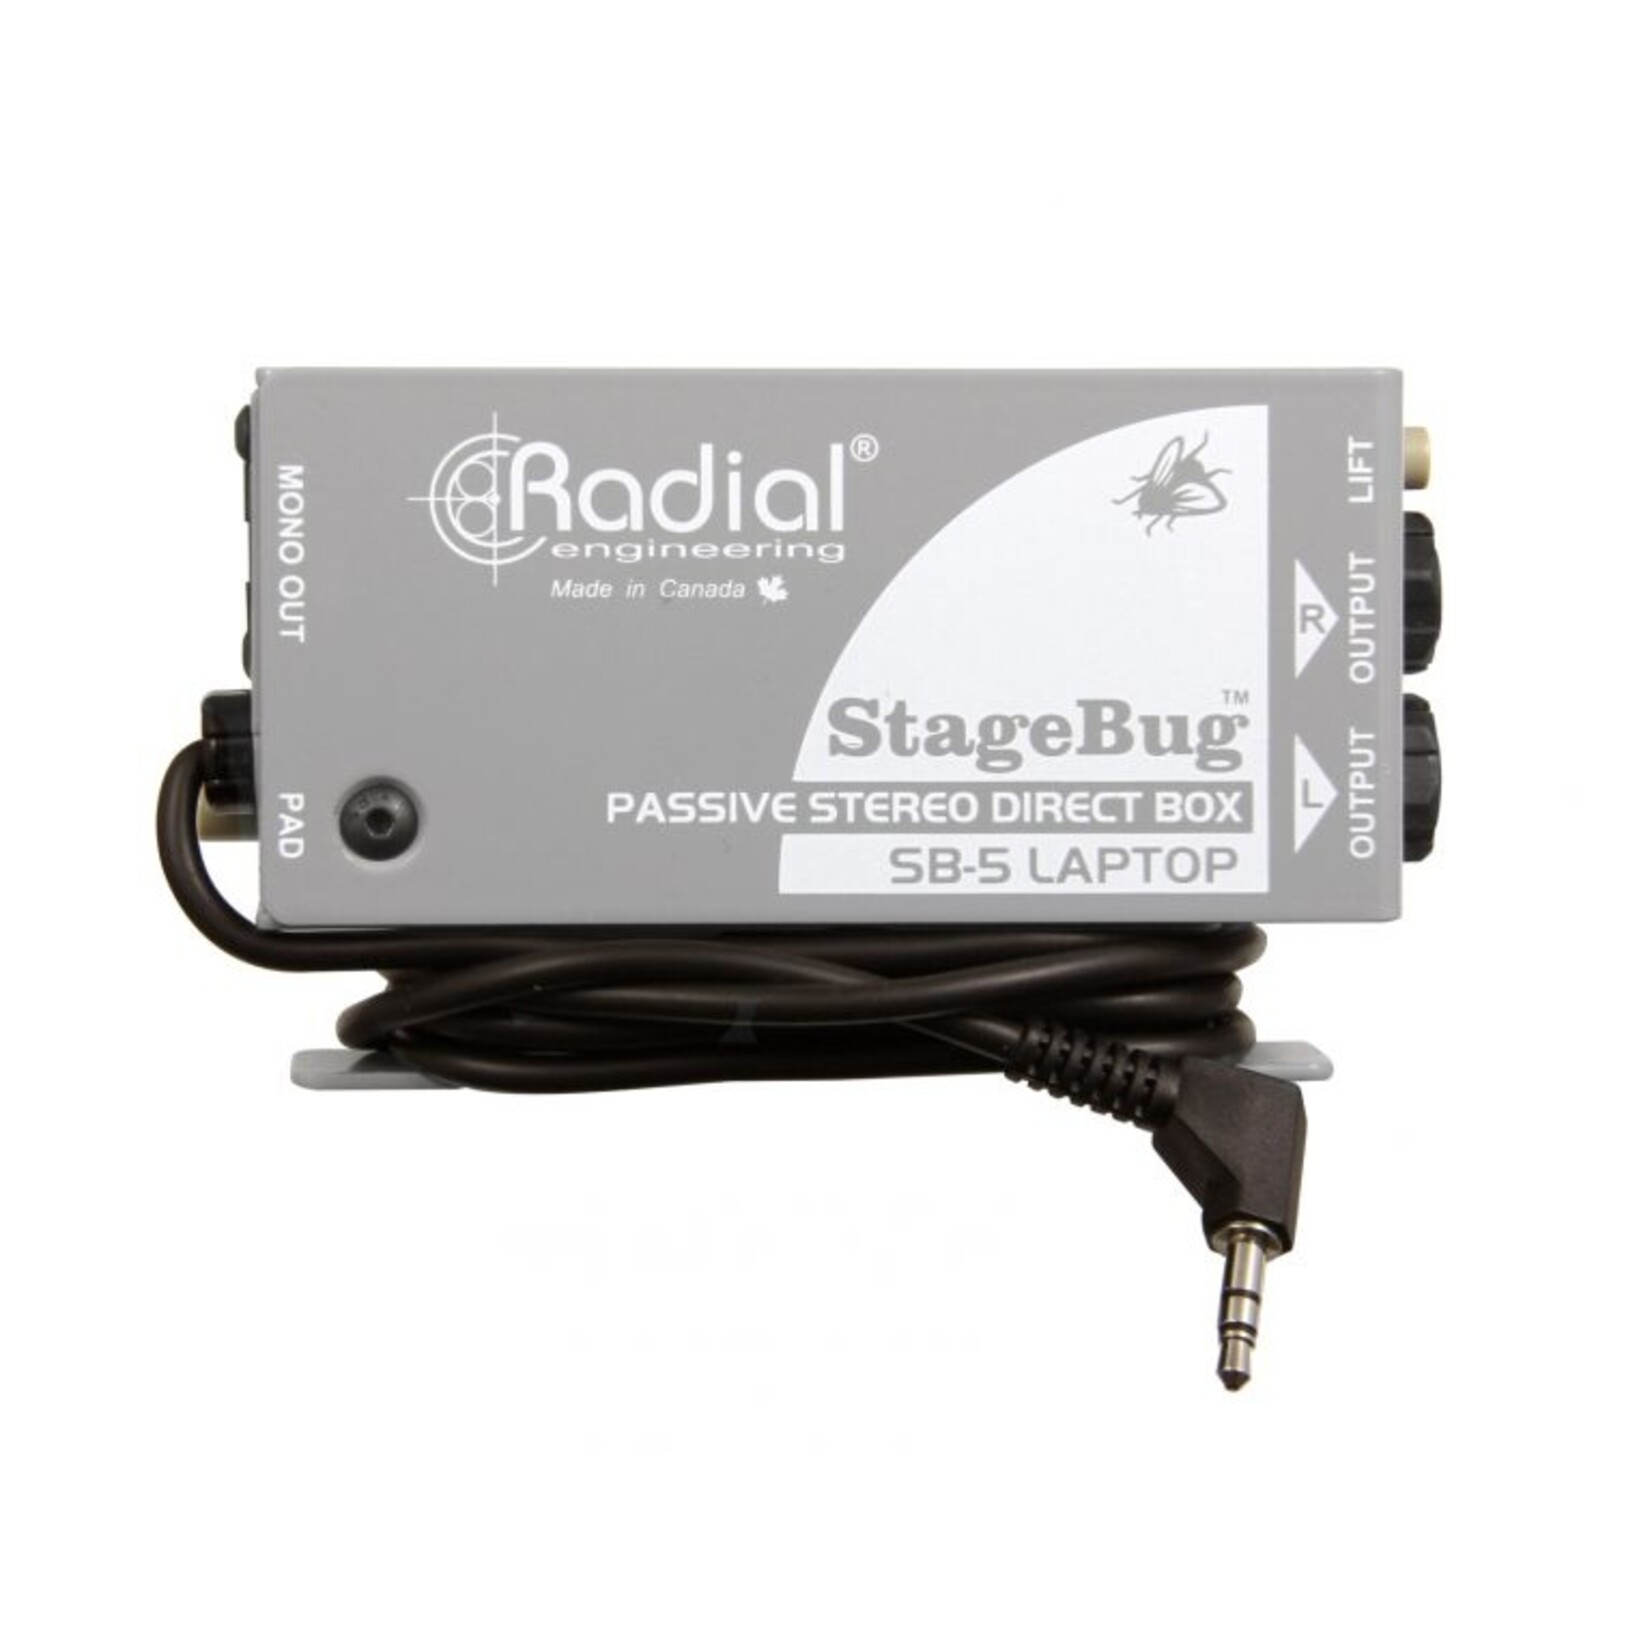 Radial StageBug SB-5 Laptop Stereo Direct Box